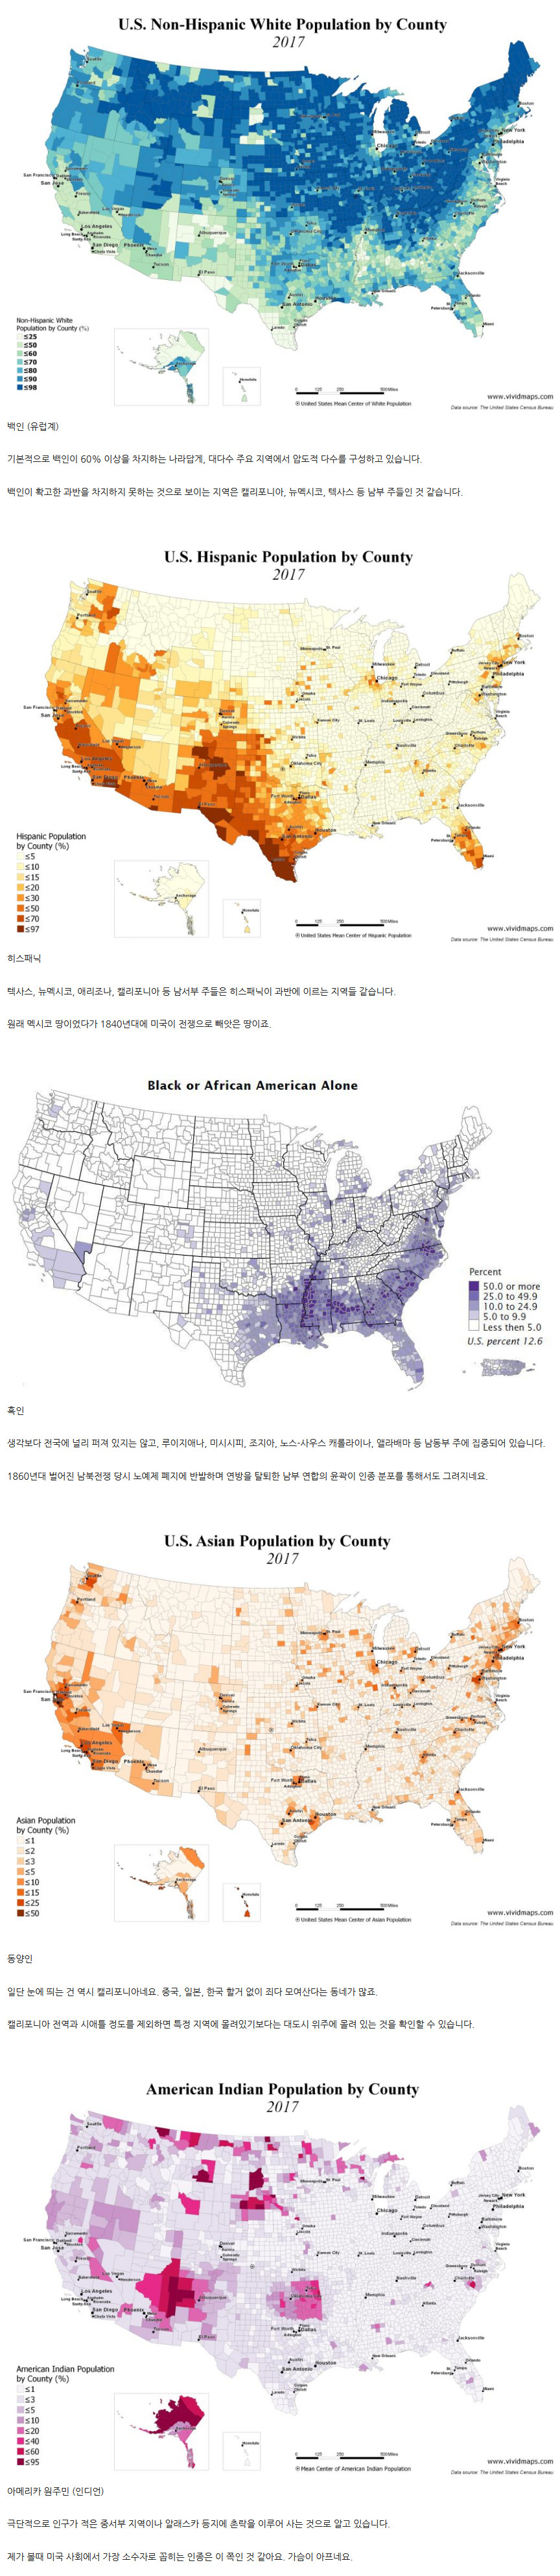 Screenshot_2021-01-14 익스트림무비 - 미국의 지역별 인종 분포도.jpg